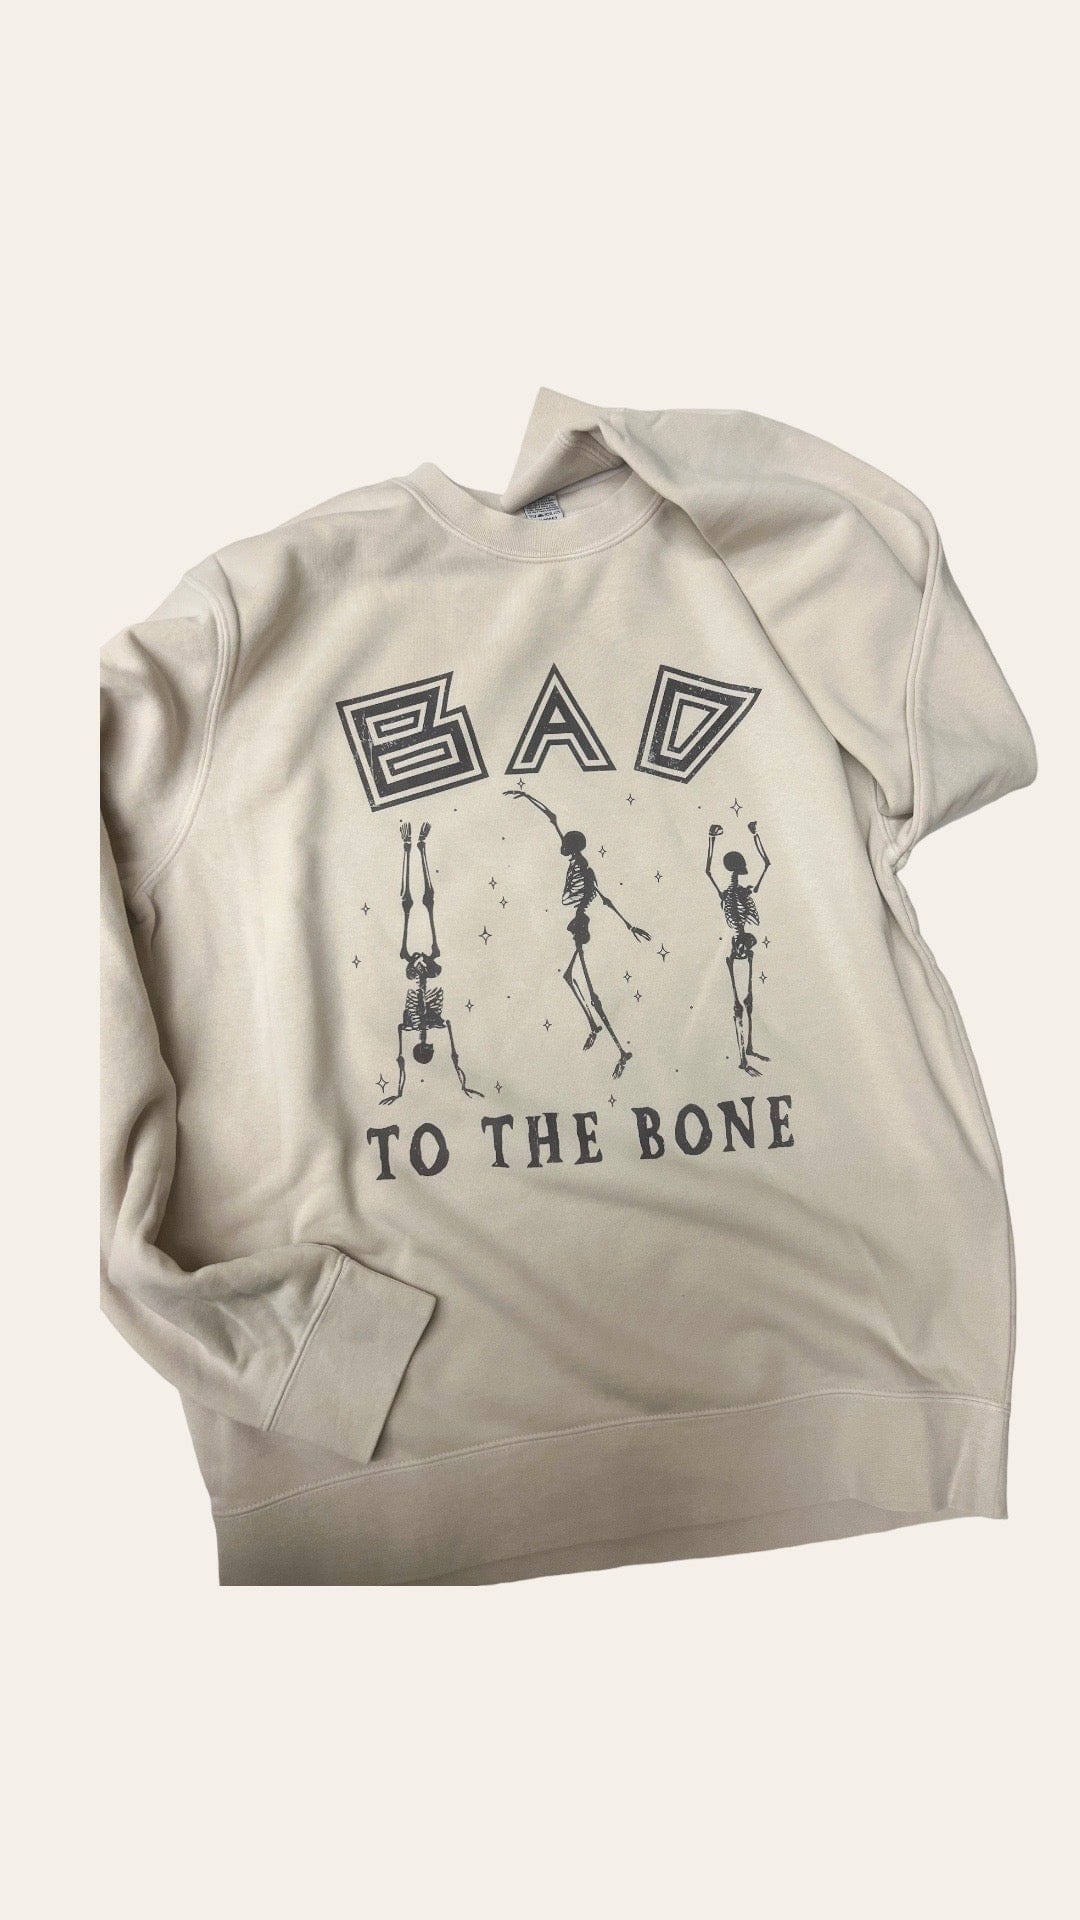 Bad to the Bone Sweatshirt